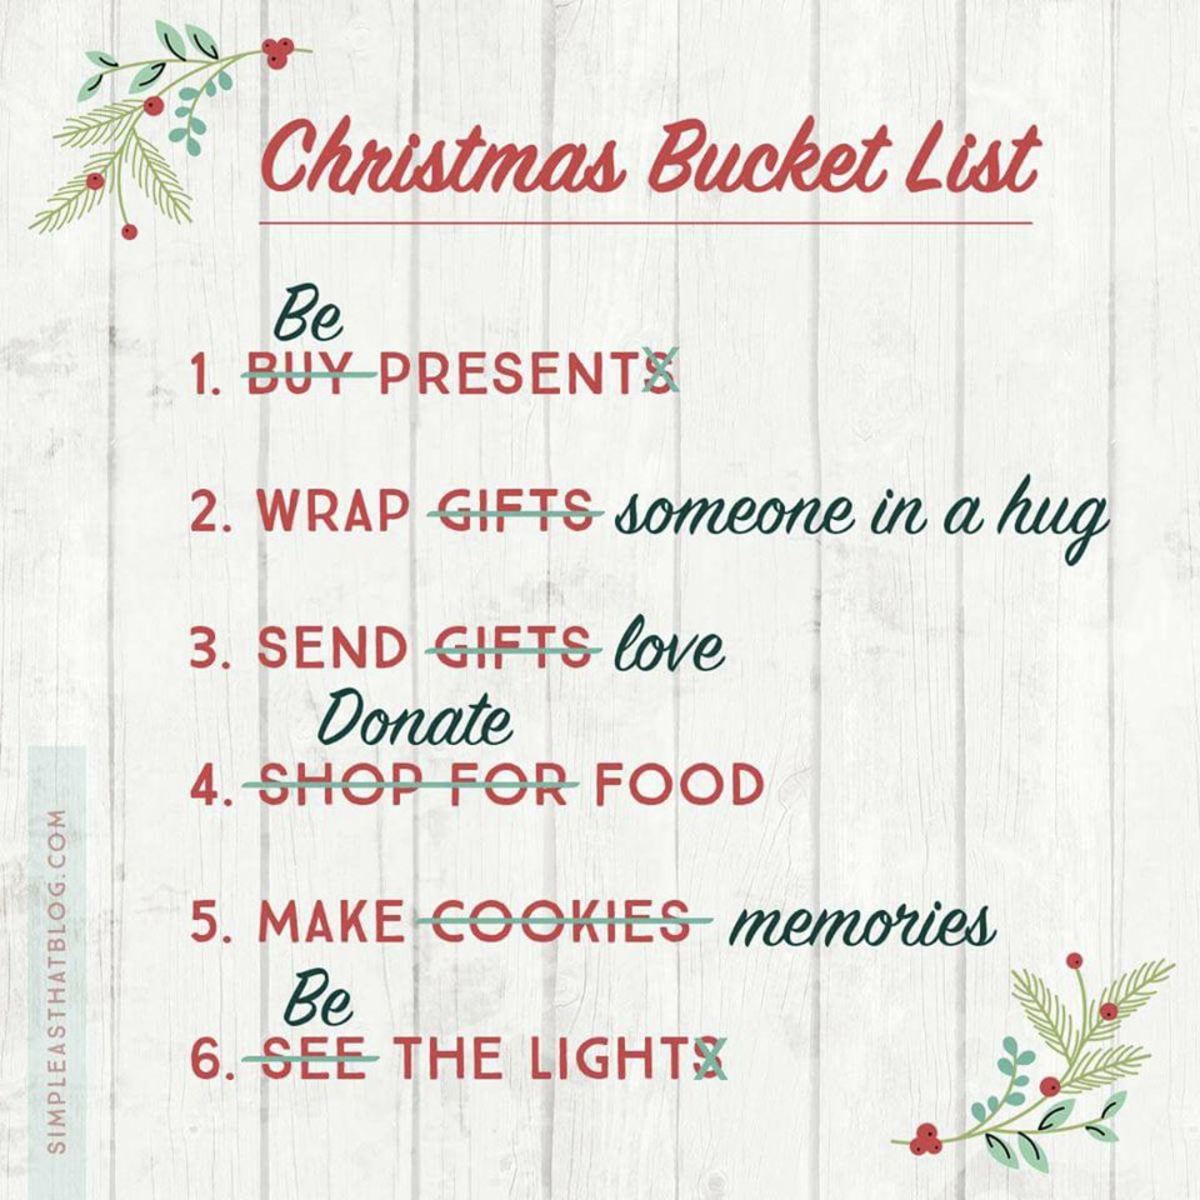 Christmas bucket list 